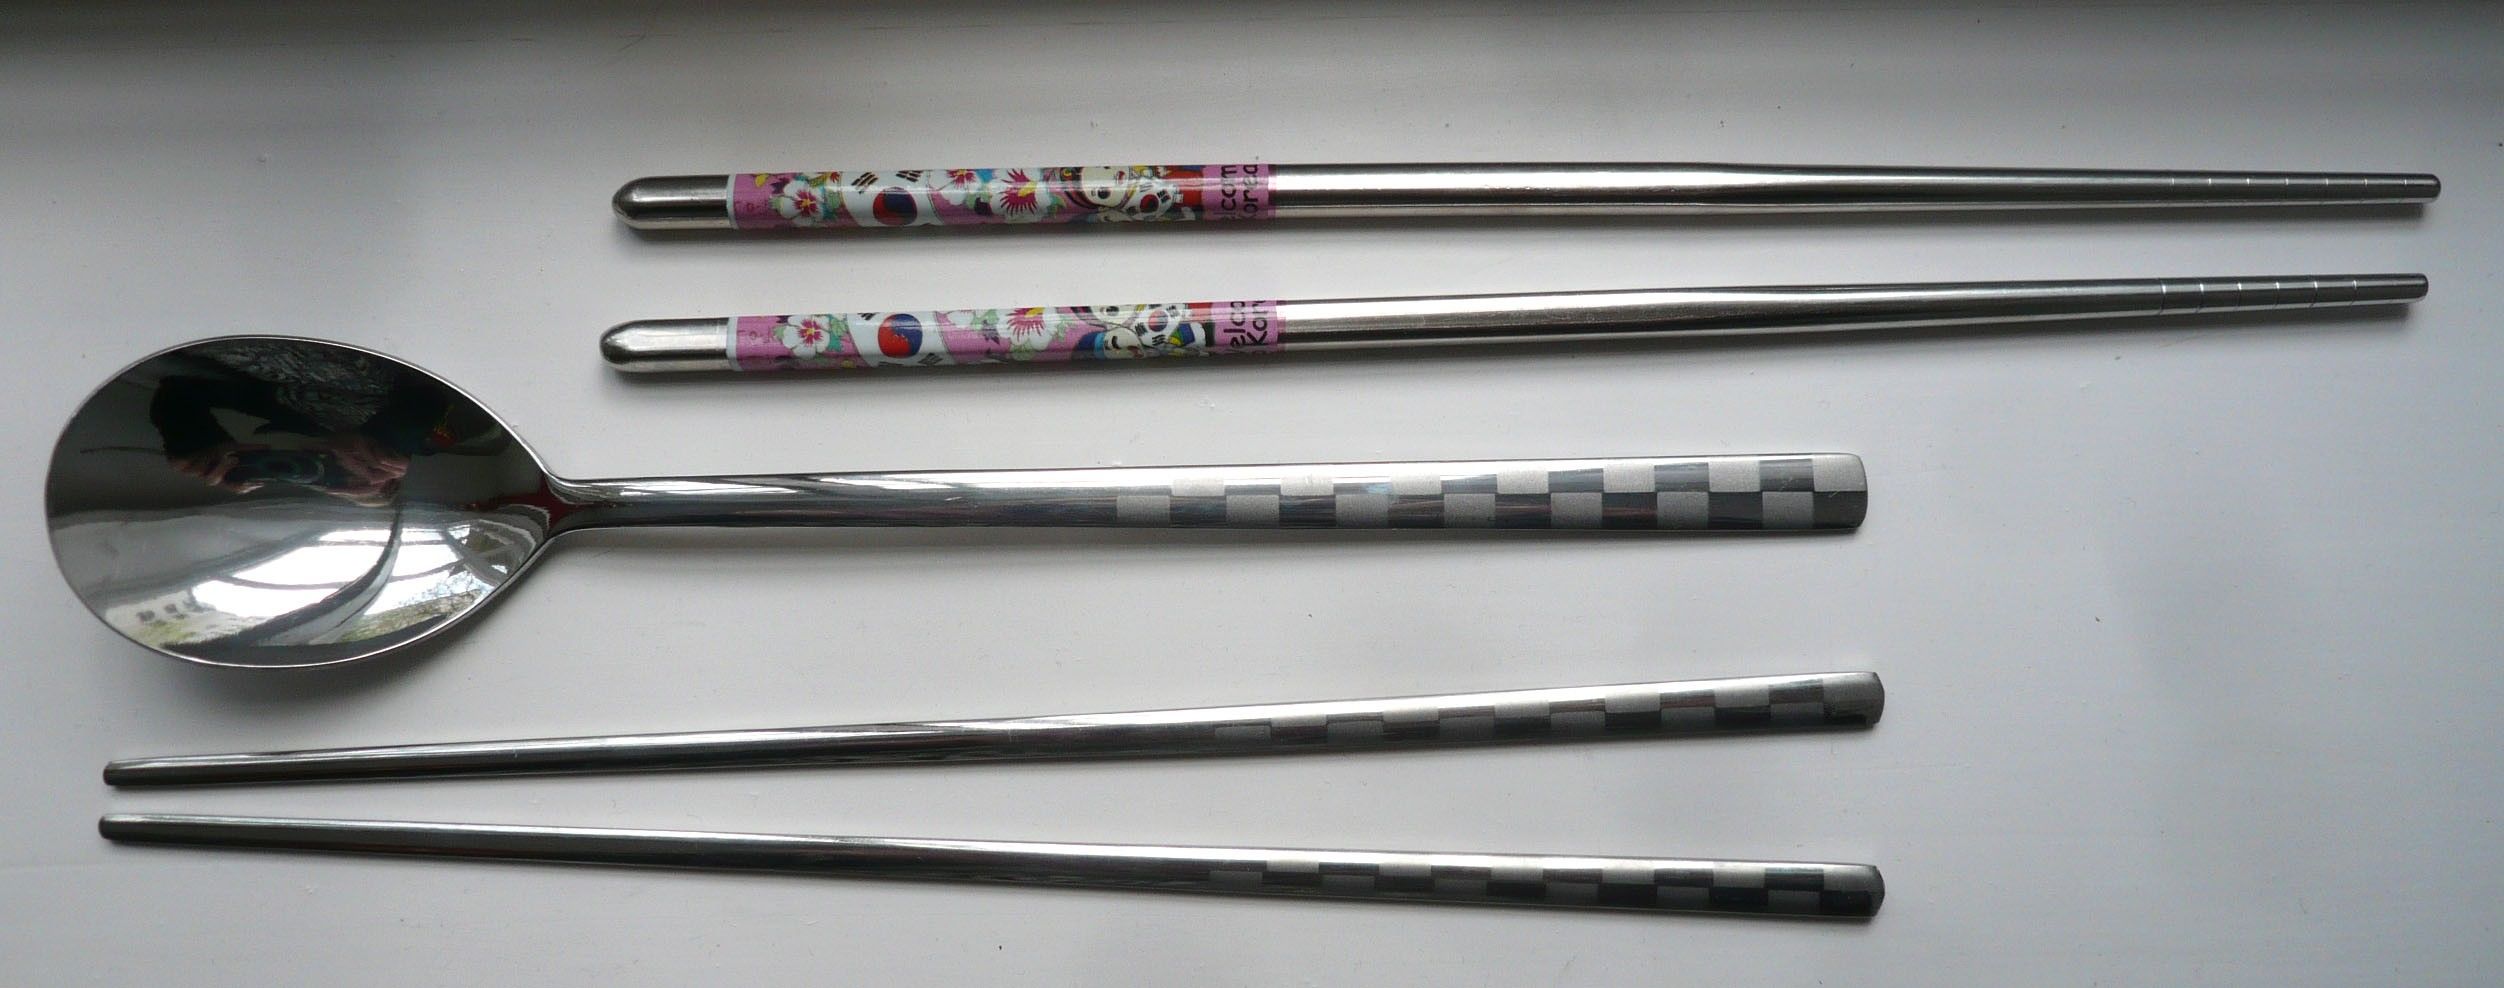 6 Sumpit Korea kebanyakan terbuat dari logam